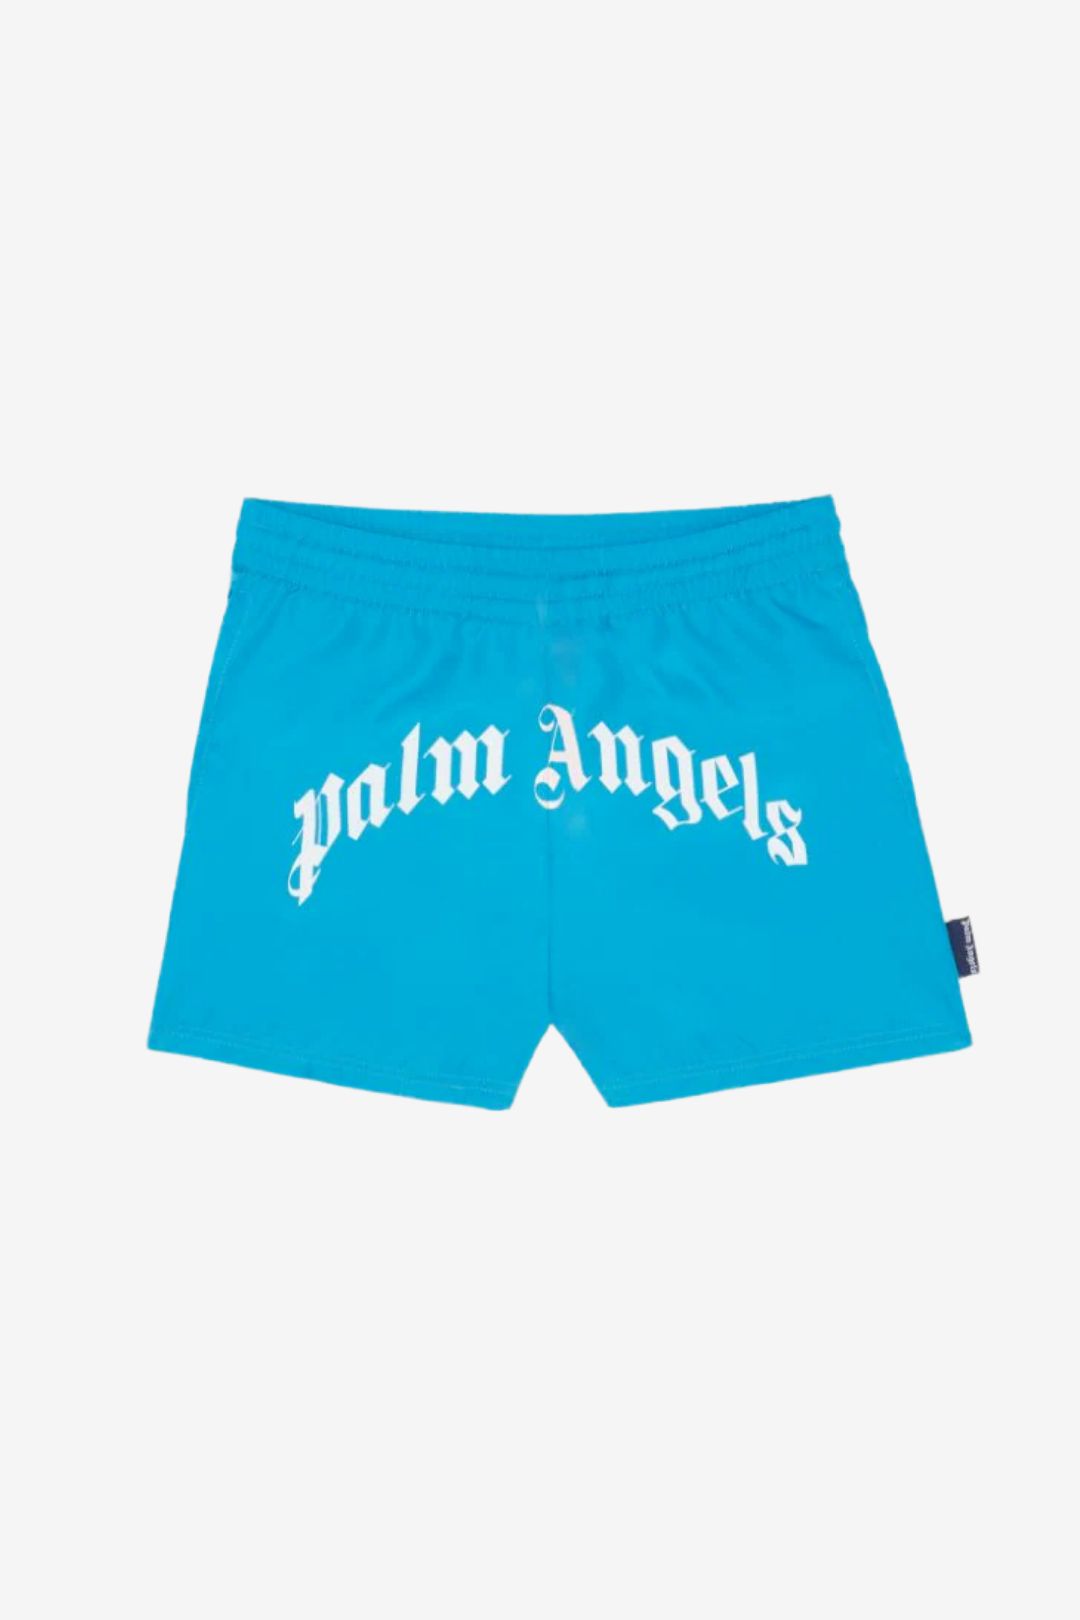 Swim Shorts with Palm Angels Logo